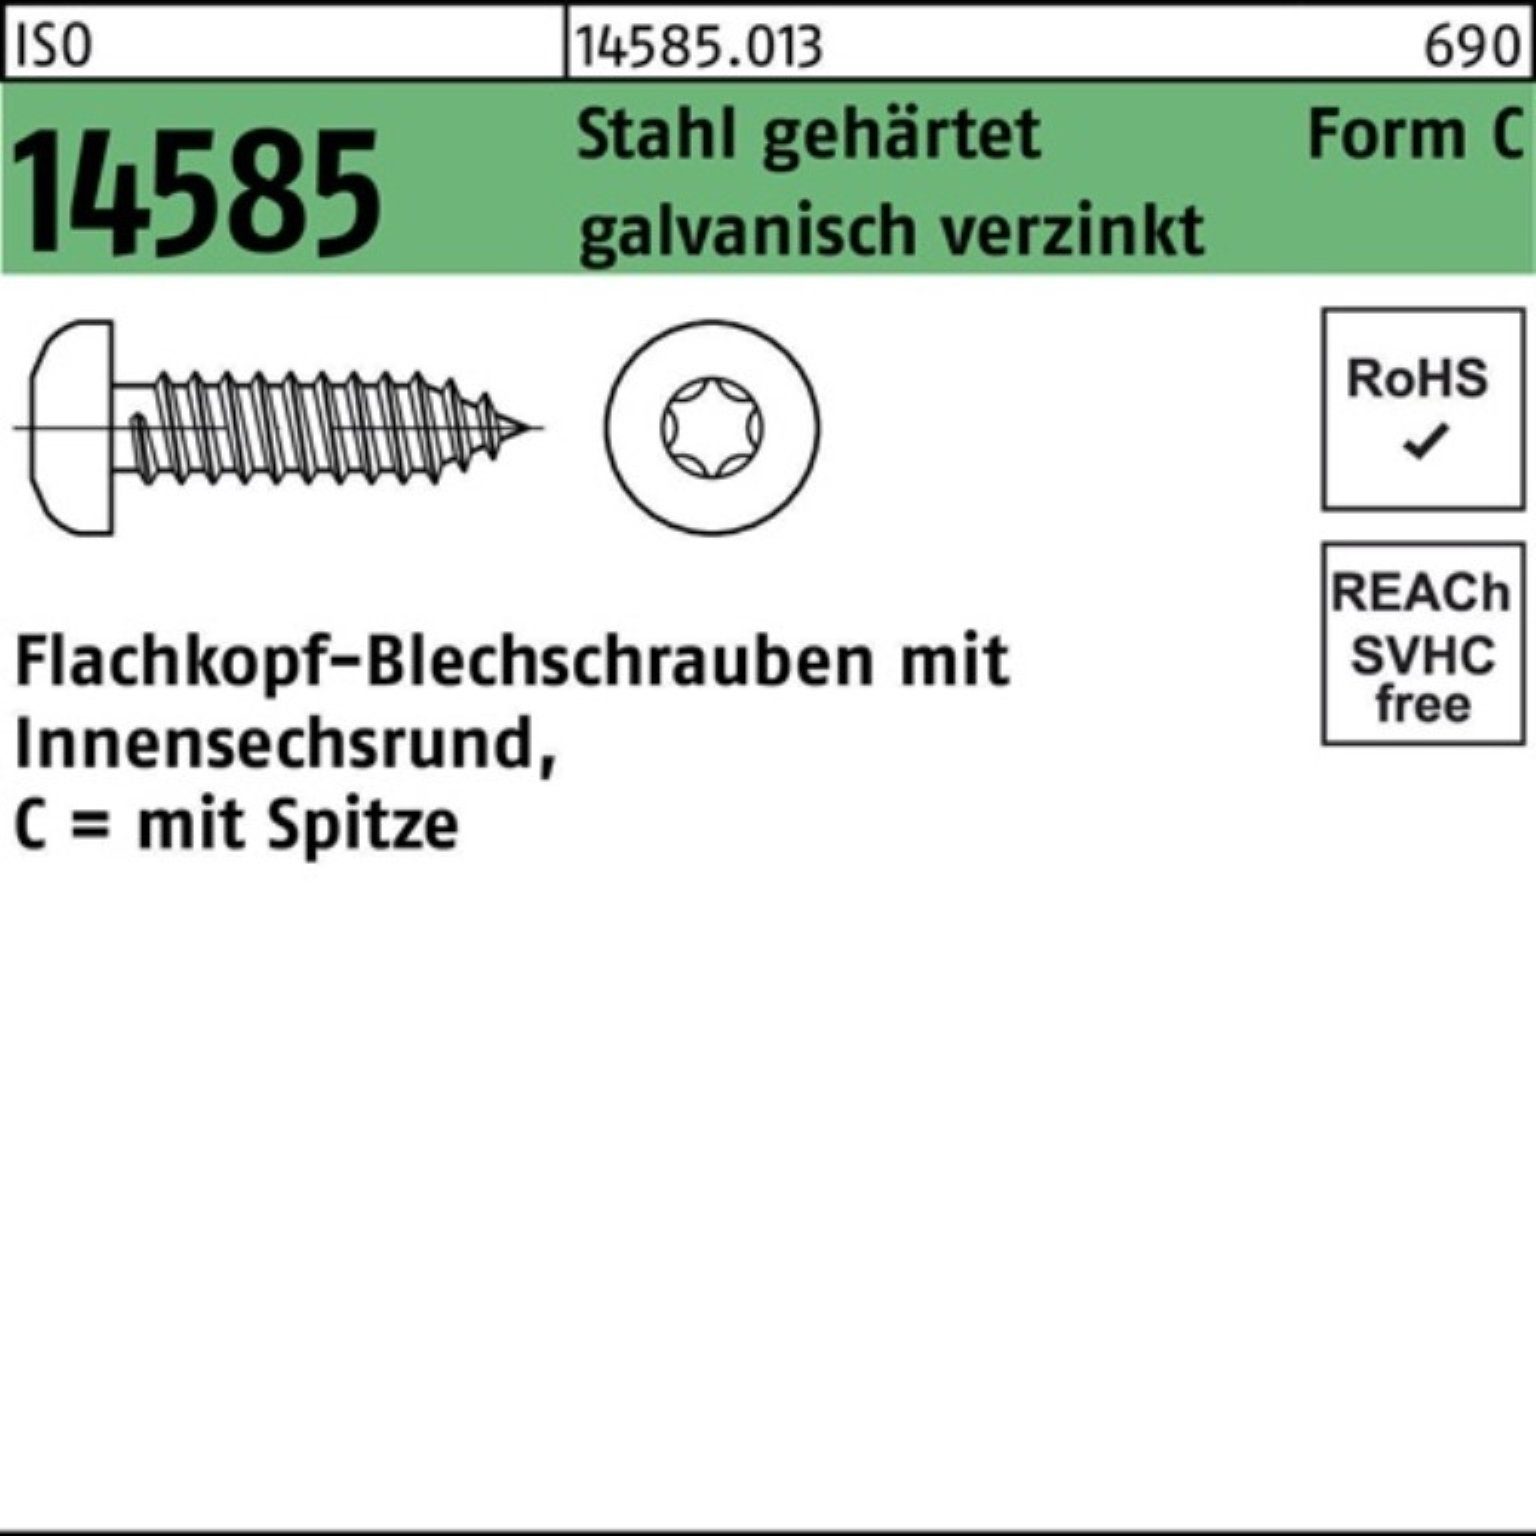 Reyher Blechschraube 250er 4,8x90 Pack Blechschraube ISO ISR/Spitze geh. -C-T25 Stahl 14585